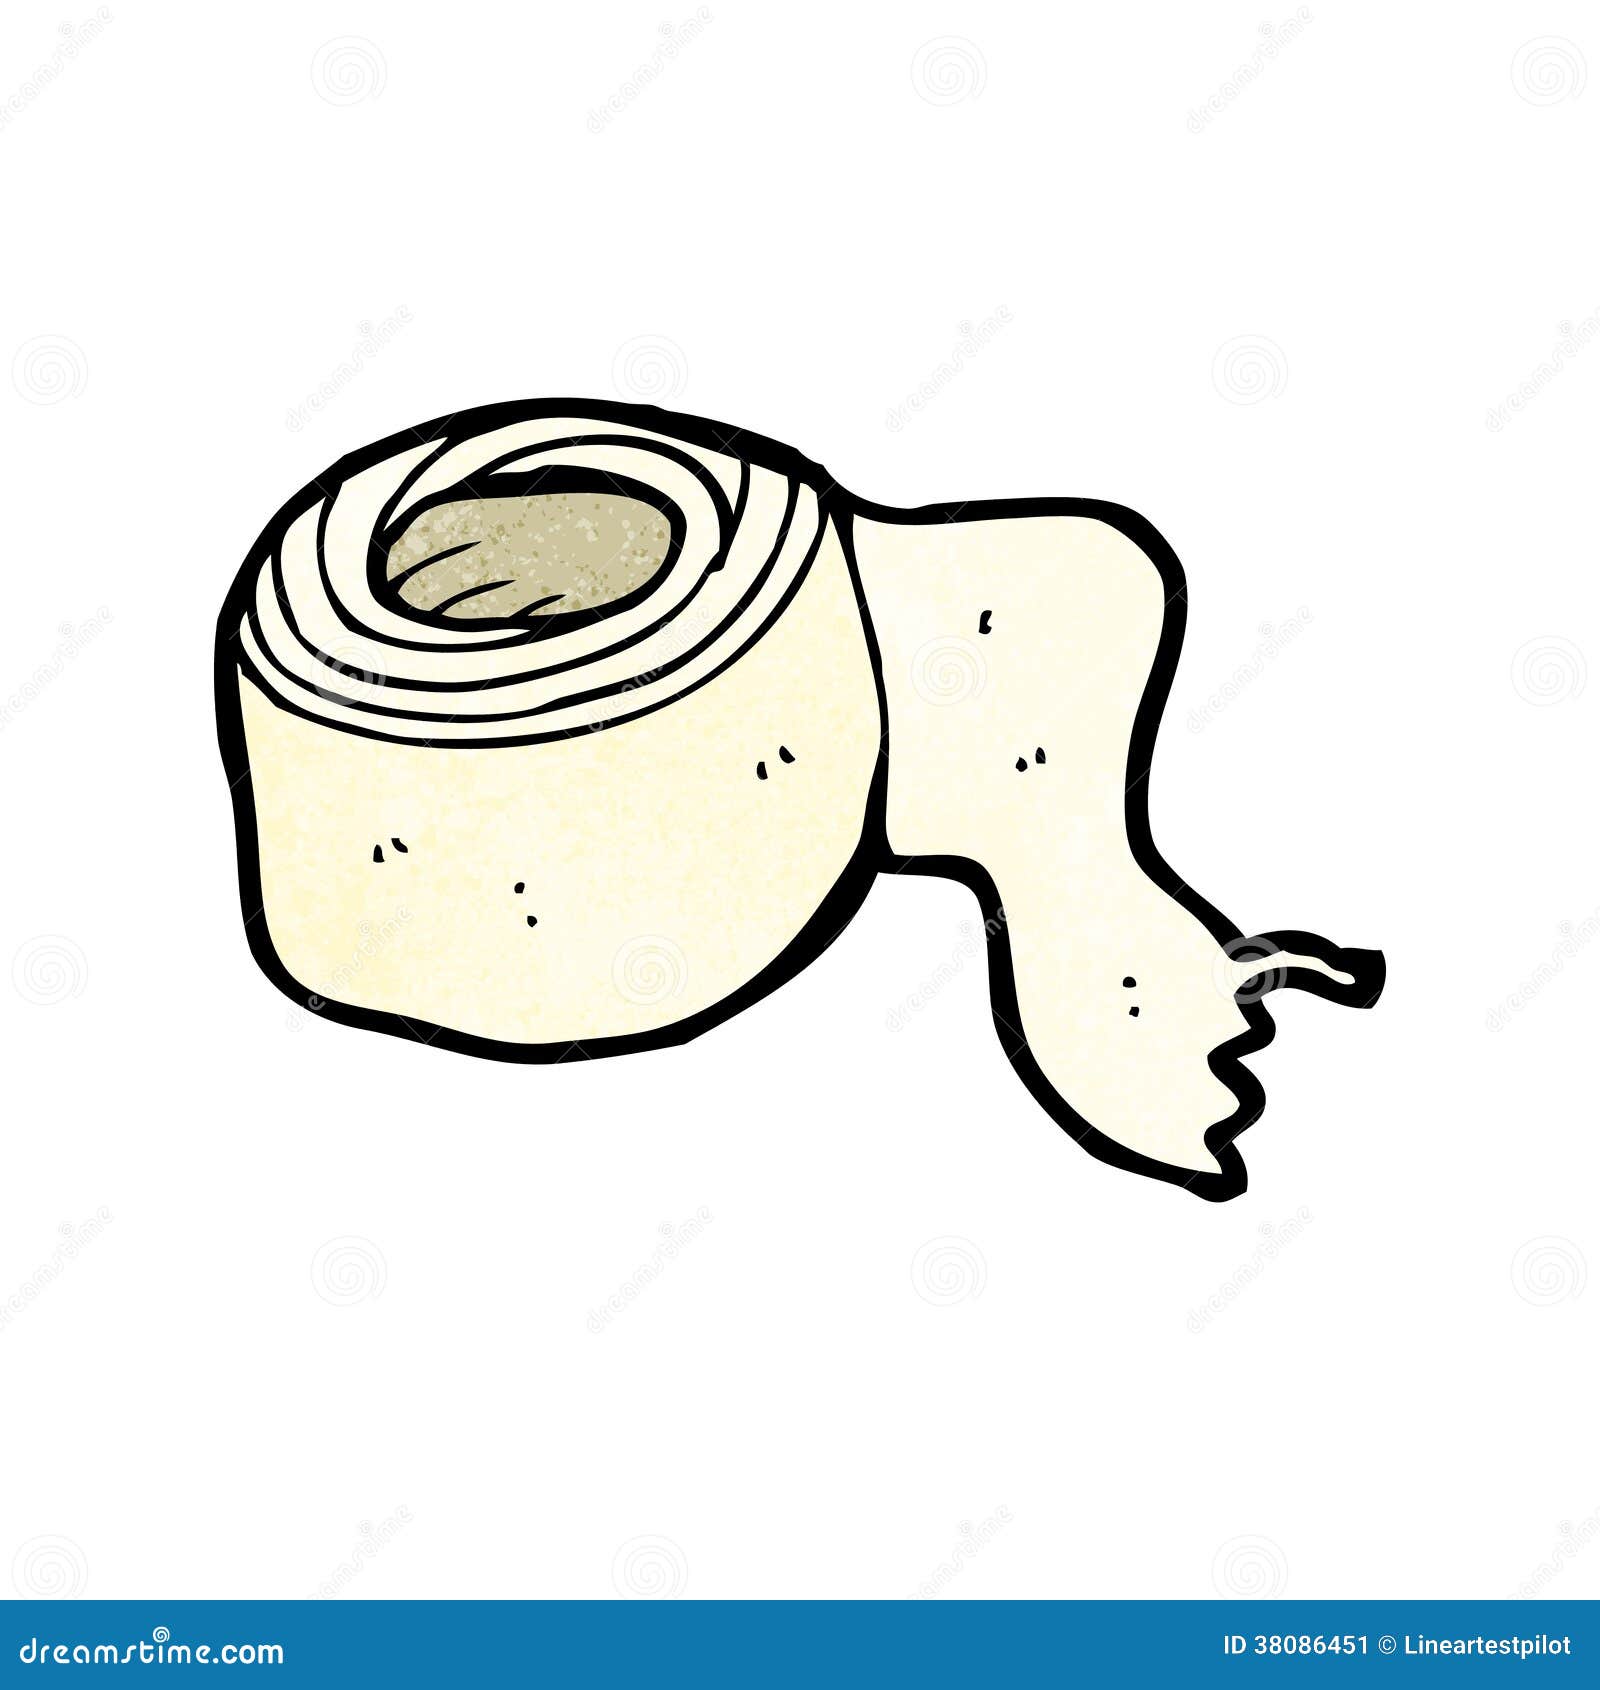 Cartoon bandages stock vector. Illustration of cartoon - 38086451